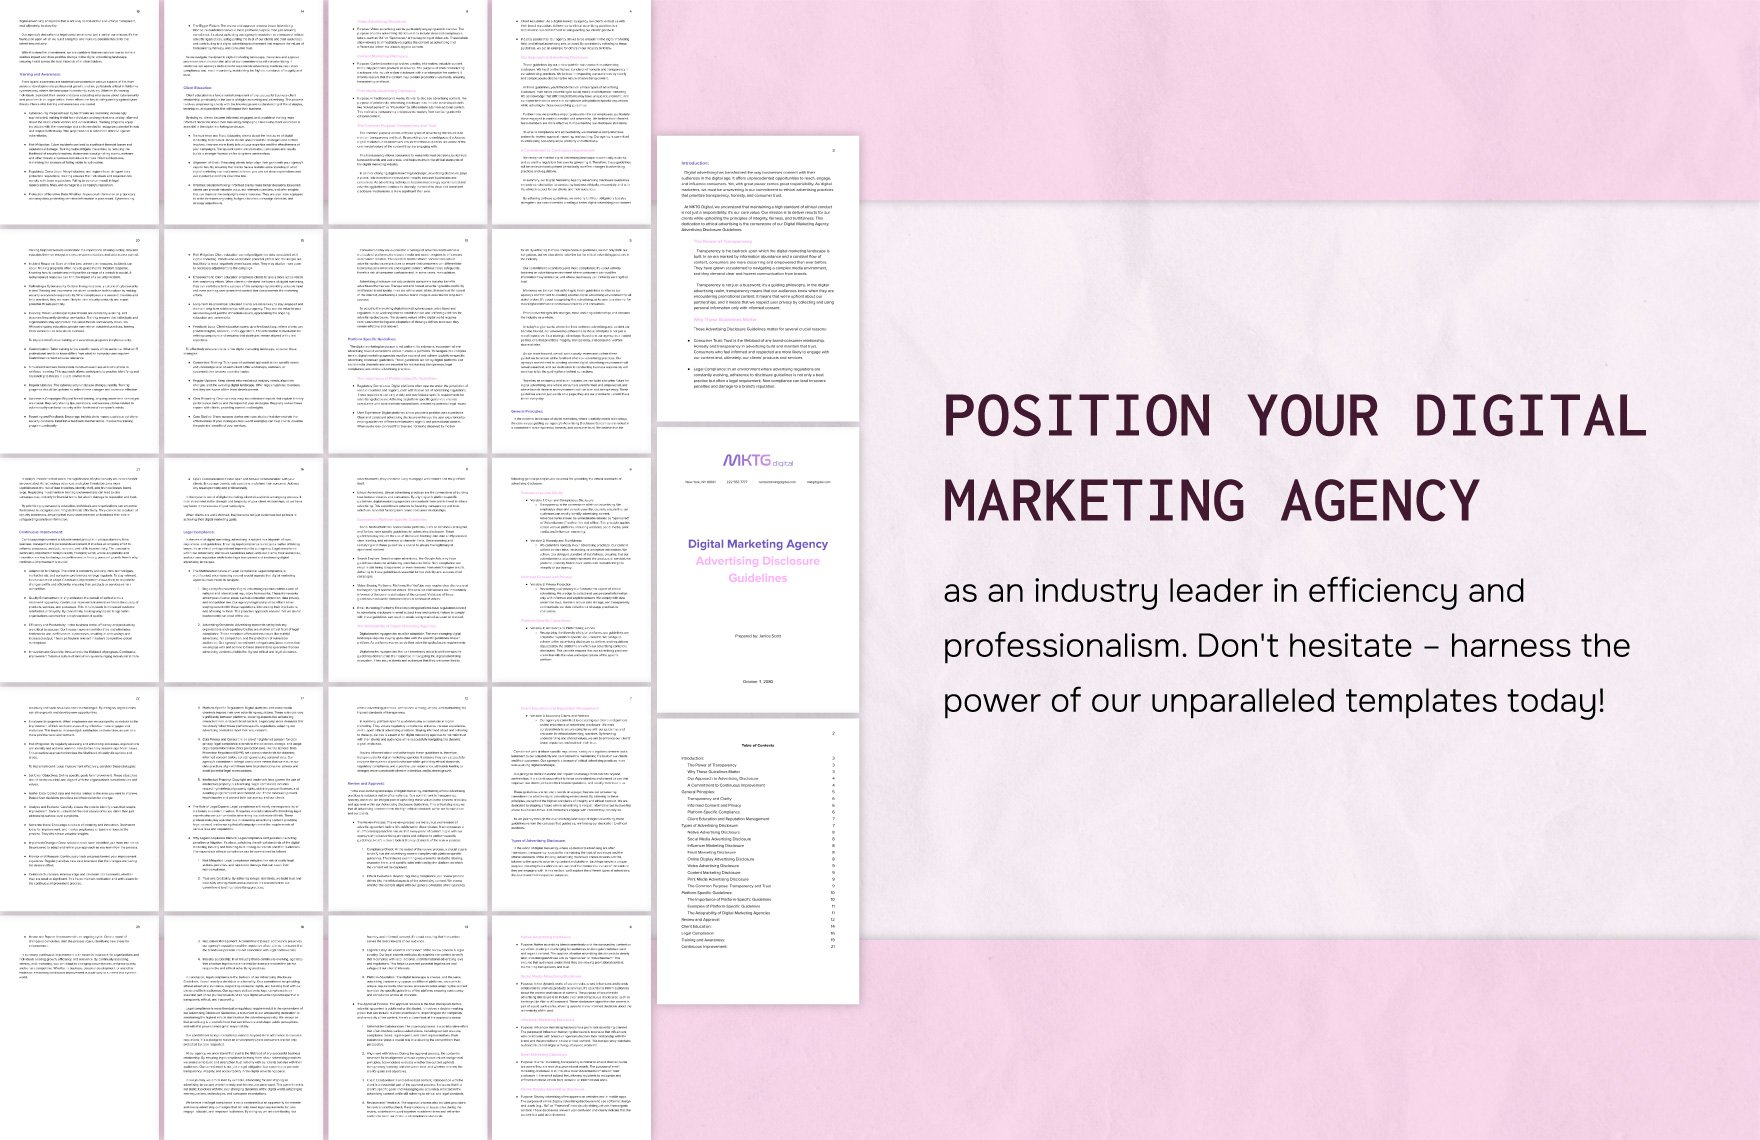 Digital Marketing Agency Advertising Disclosure Guidelines Template